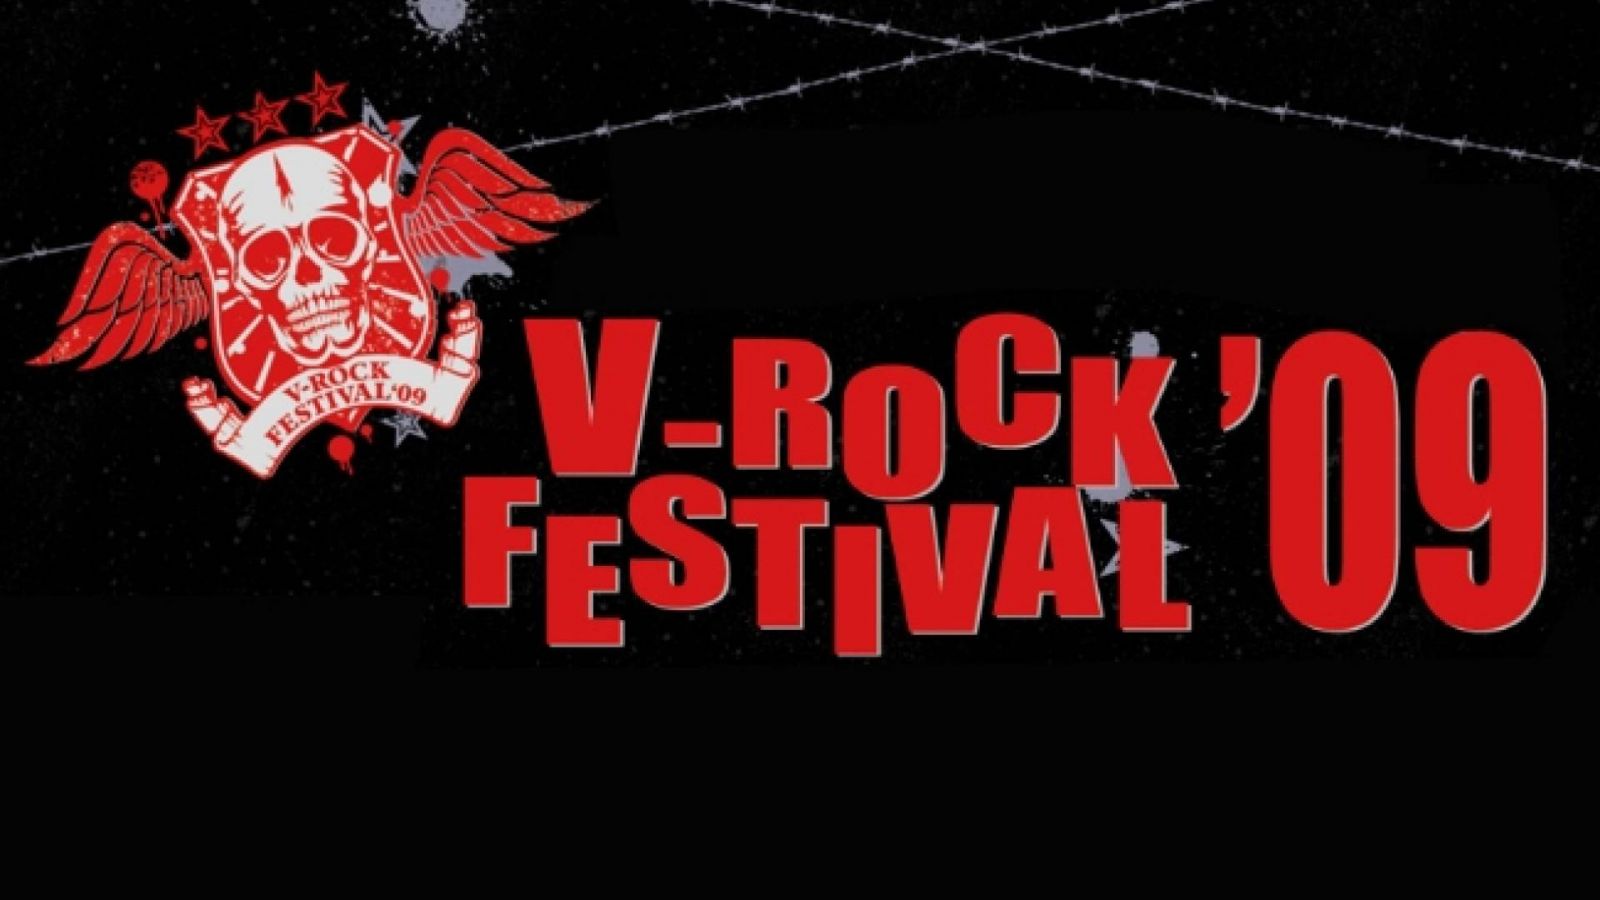 Anunciado o V-ROCK FESTIVAL 2011 © Backstage Project